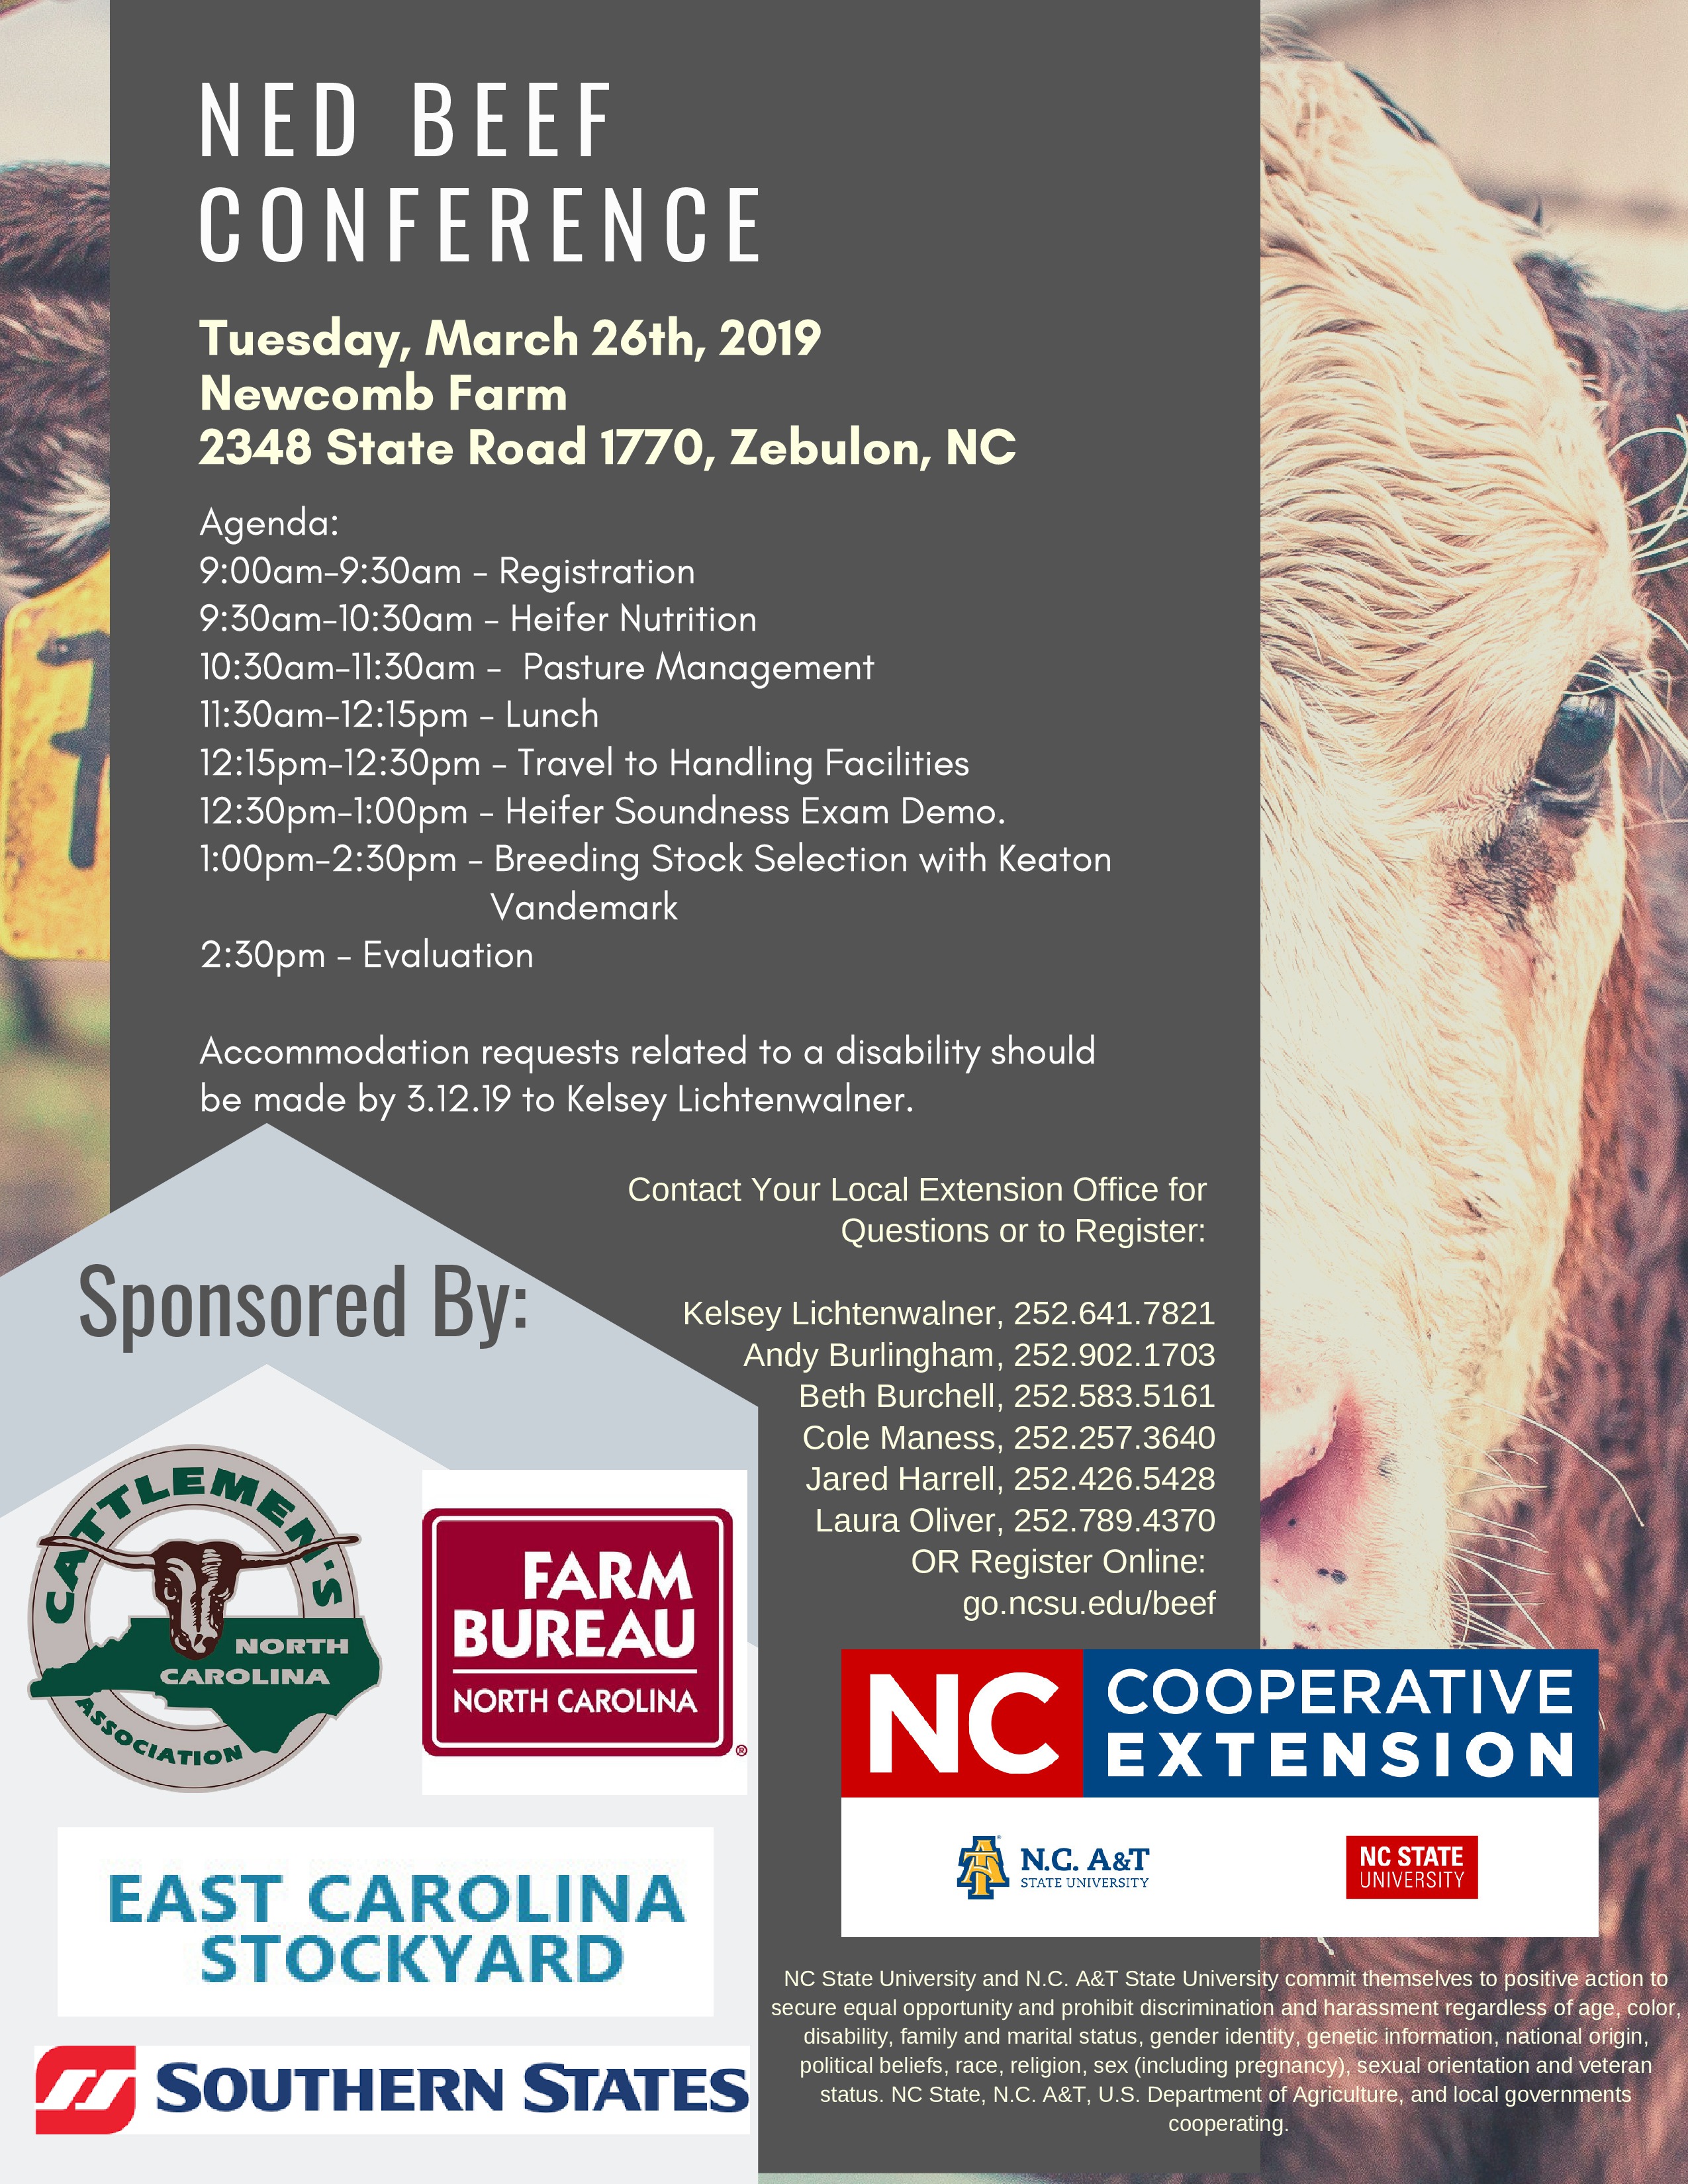 NED Beef Conference Flyer. Call Kelsey Lichtenwalner at (252) 641-7821 for details.